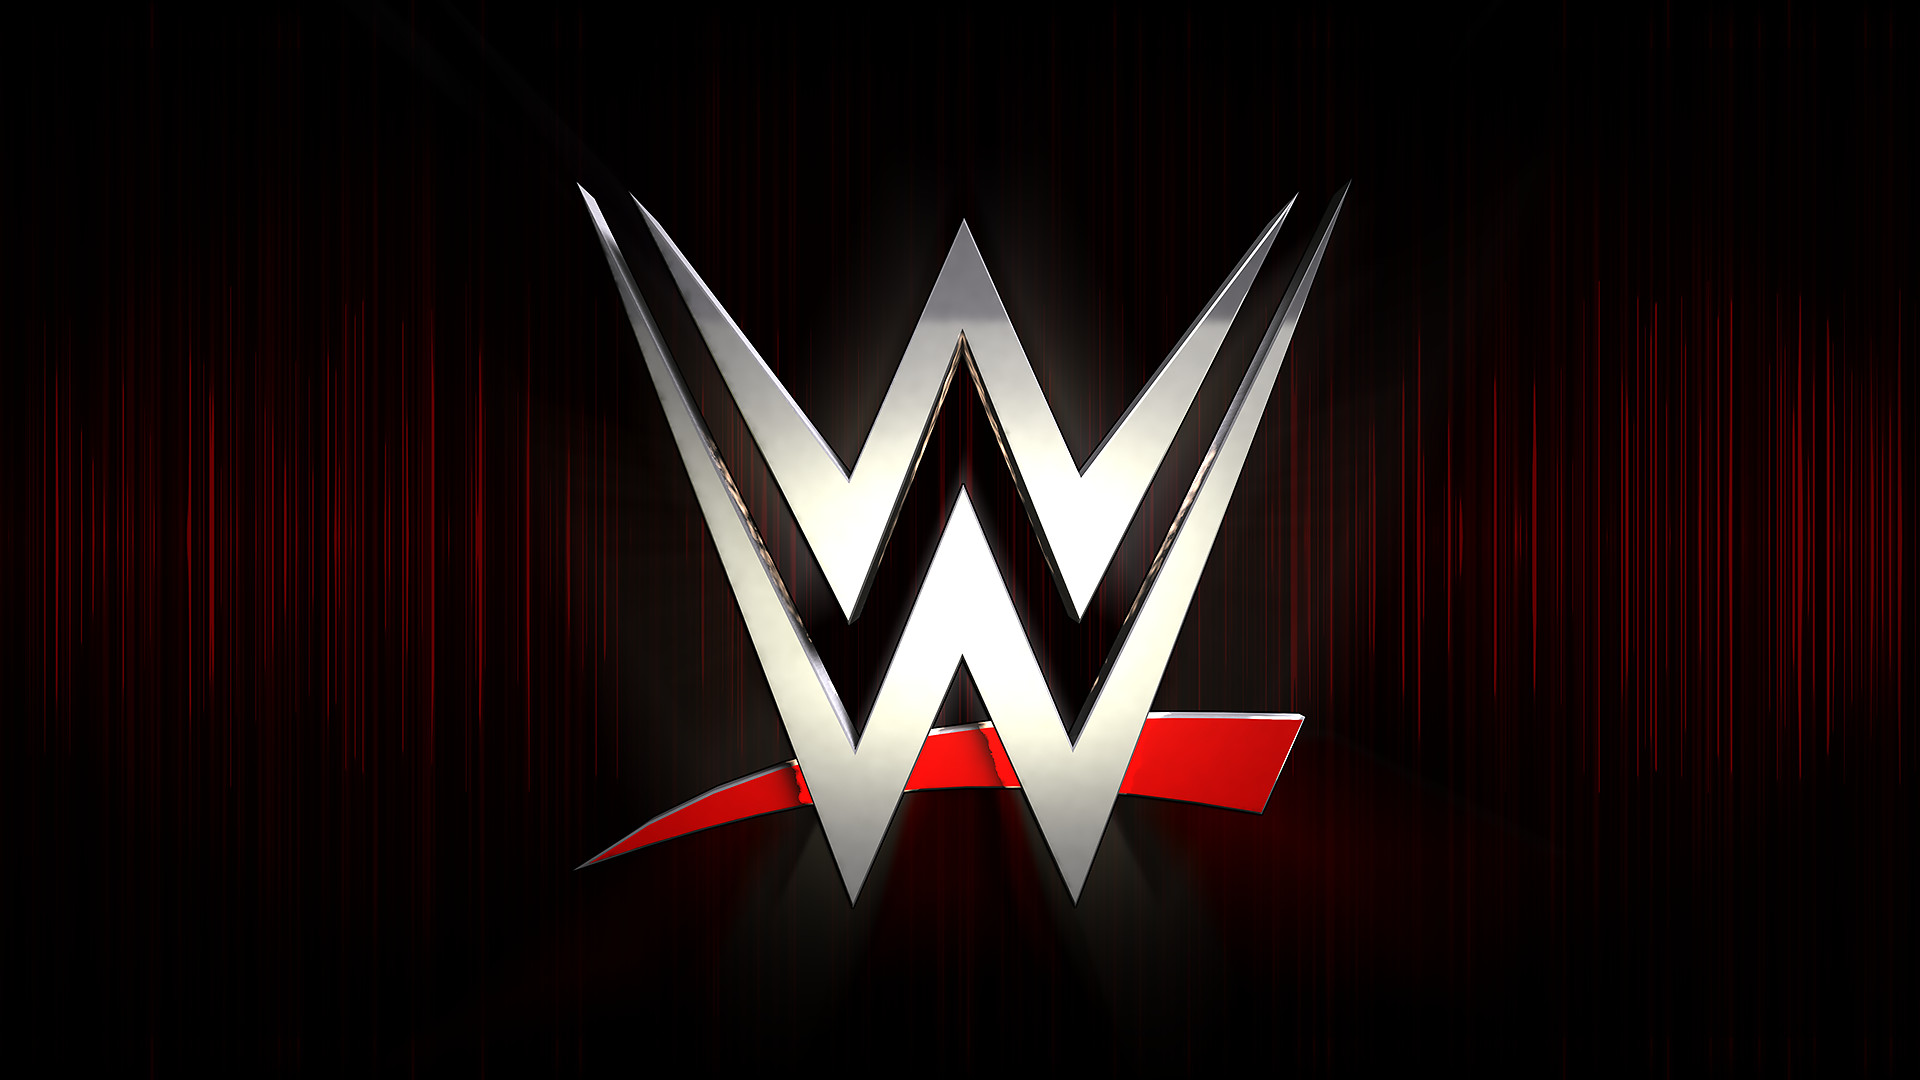 WWE HD Wallpapers Wallpaper | HD Wallpapers | Pinterest | Hd wallpaper,  Wallpaper and Wallpaper free download